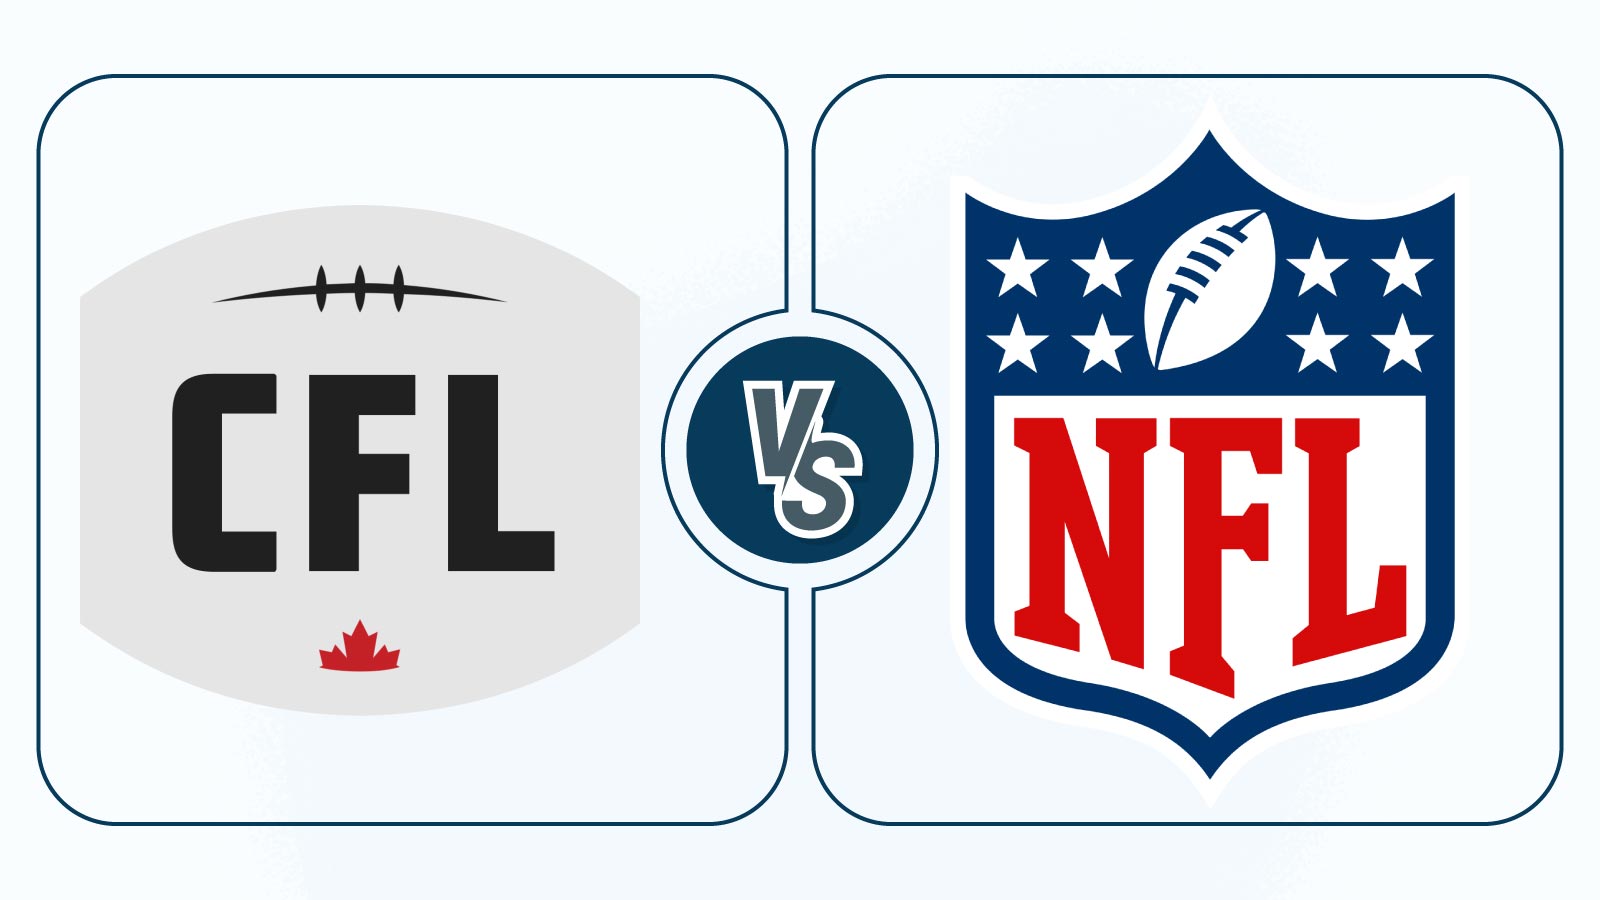 NFL vs CFL core differences